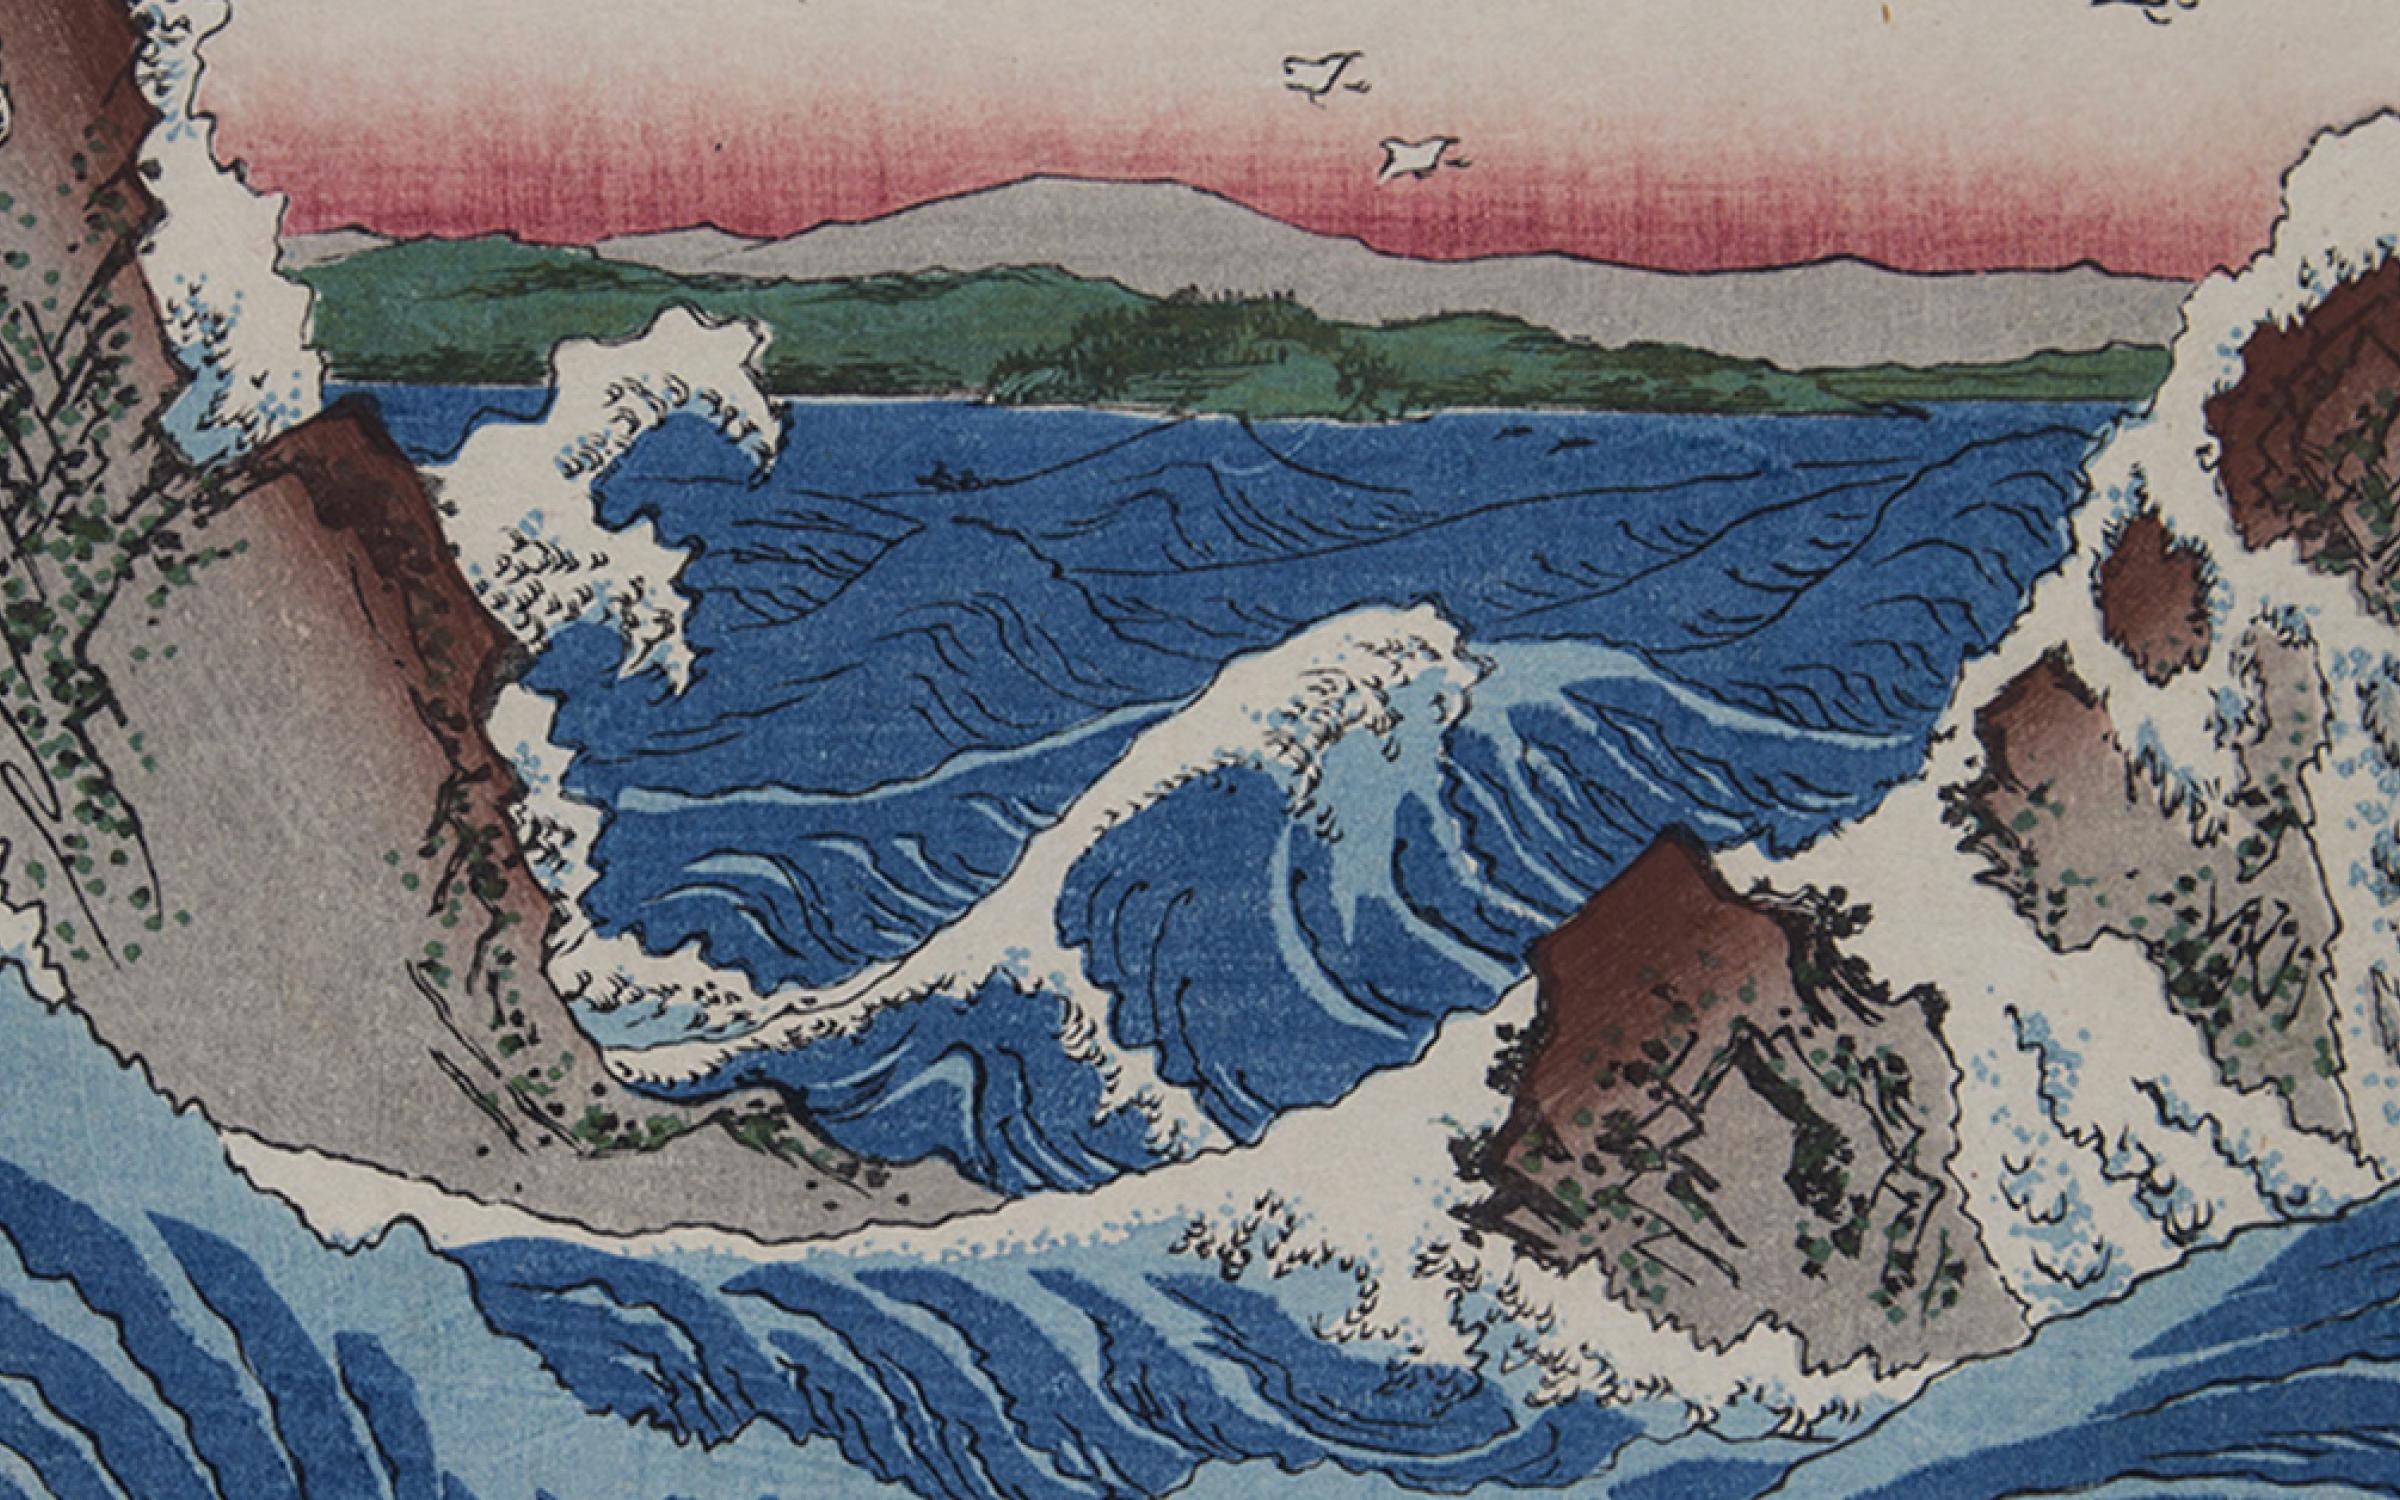 Utagawa Hiroshige, "Rough Sea at Naruto in Awa Province (Awa Province: Naruto Whirlpools)," woodblock print, 1853